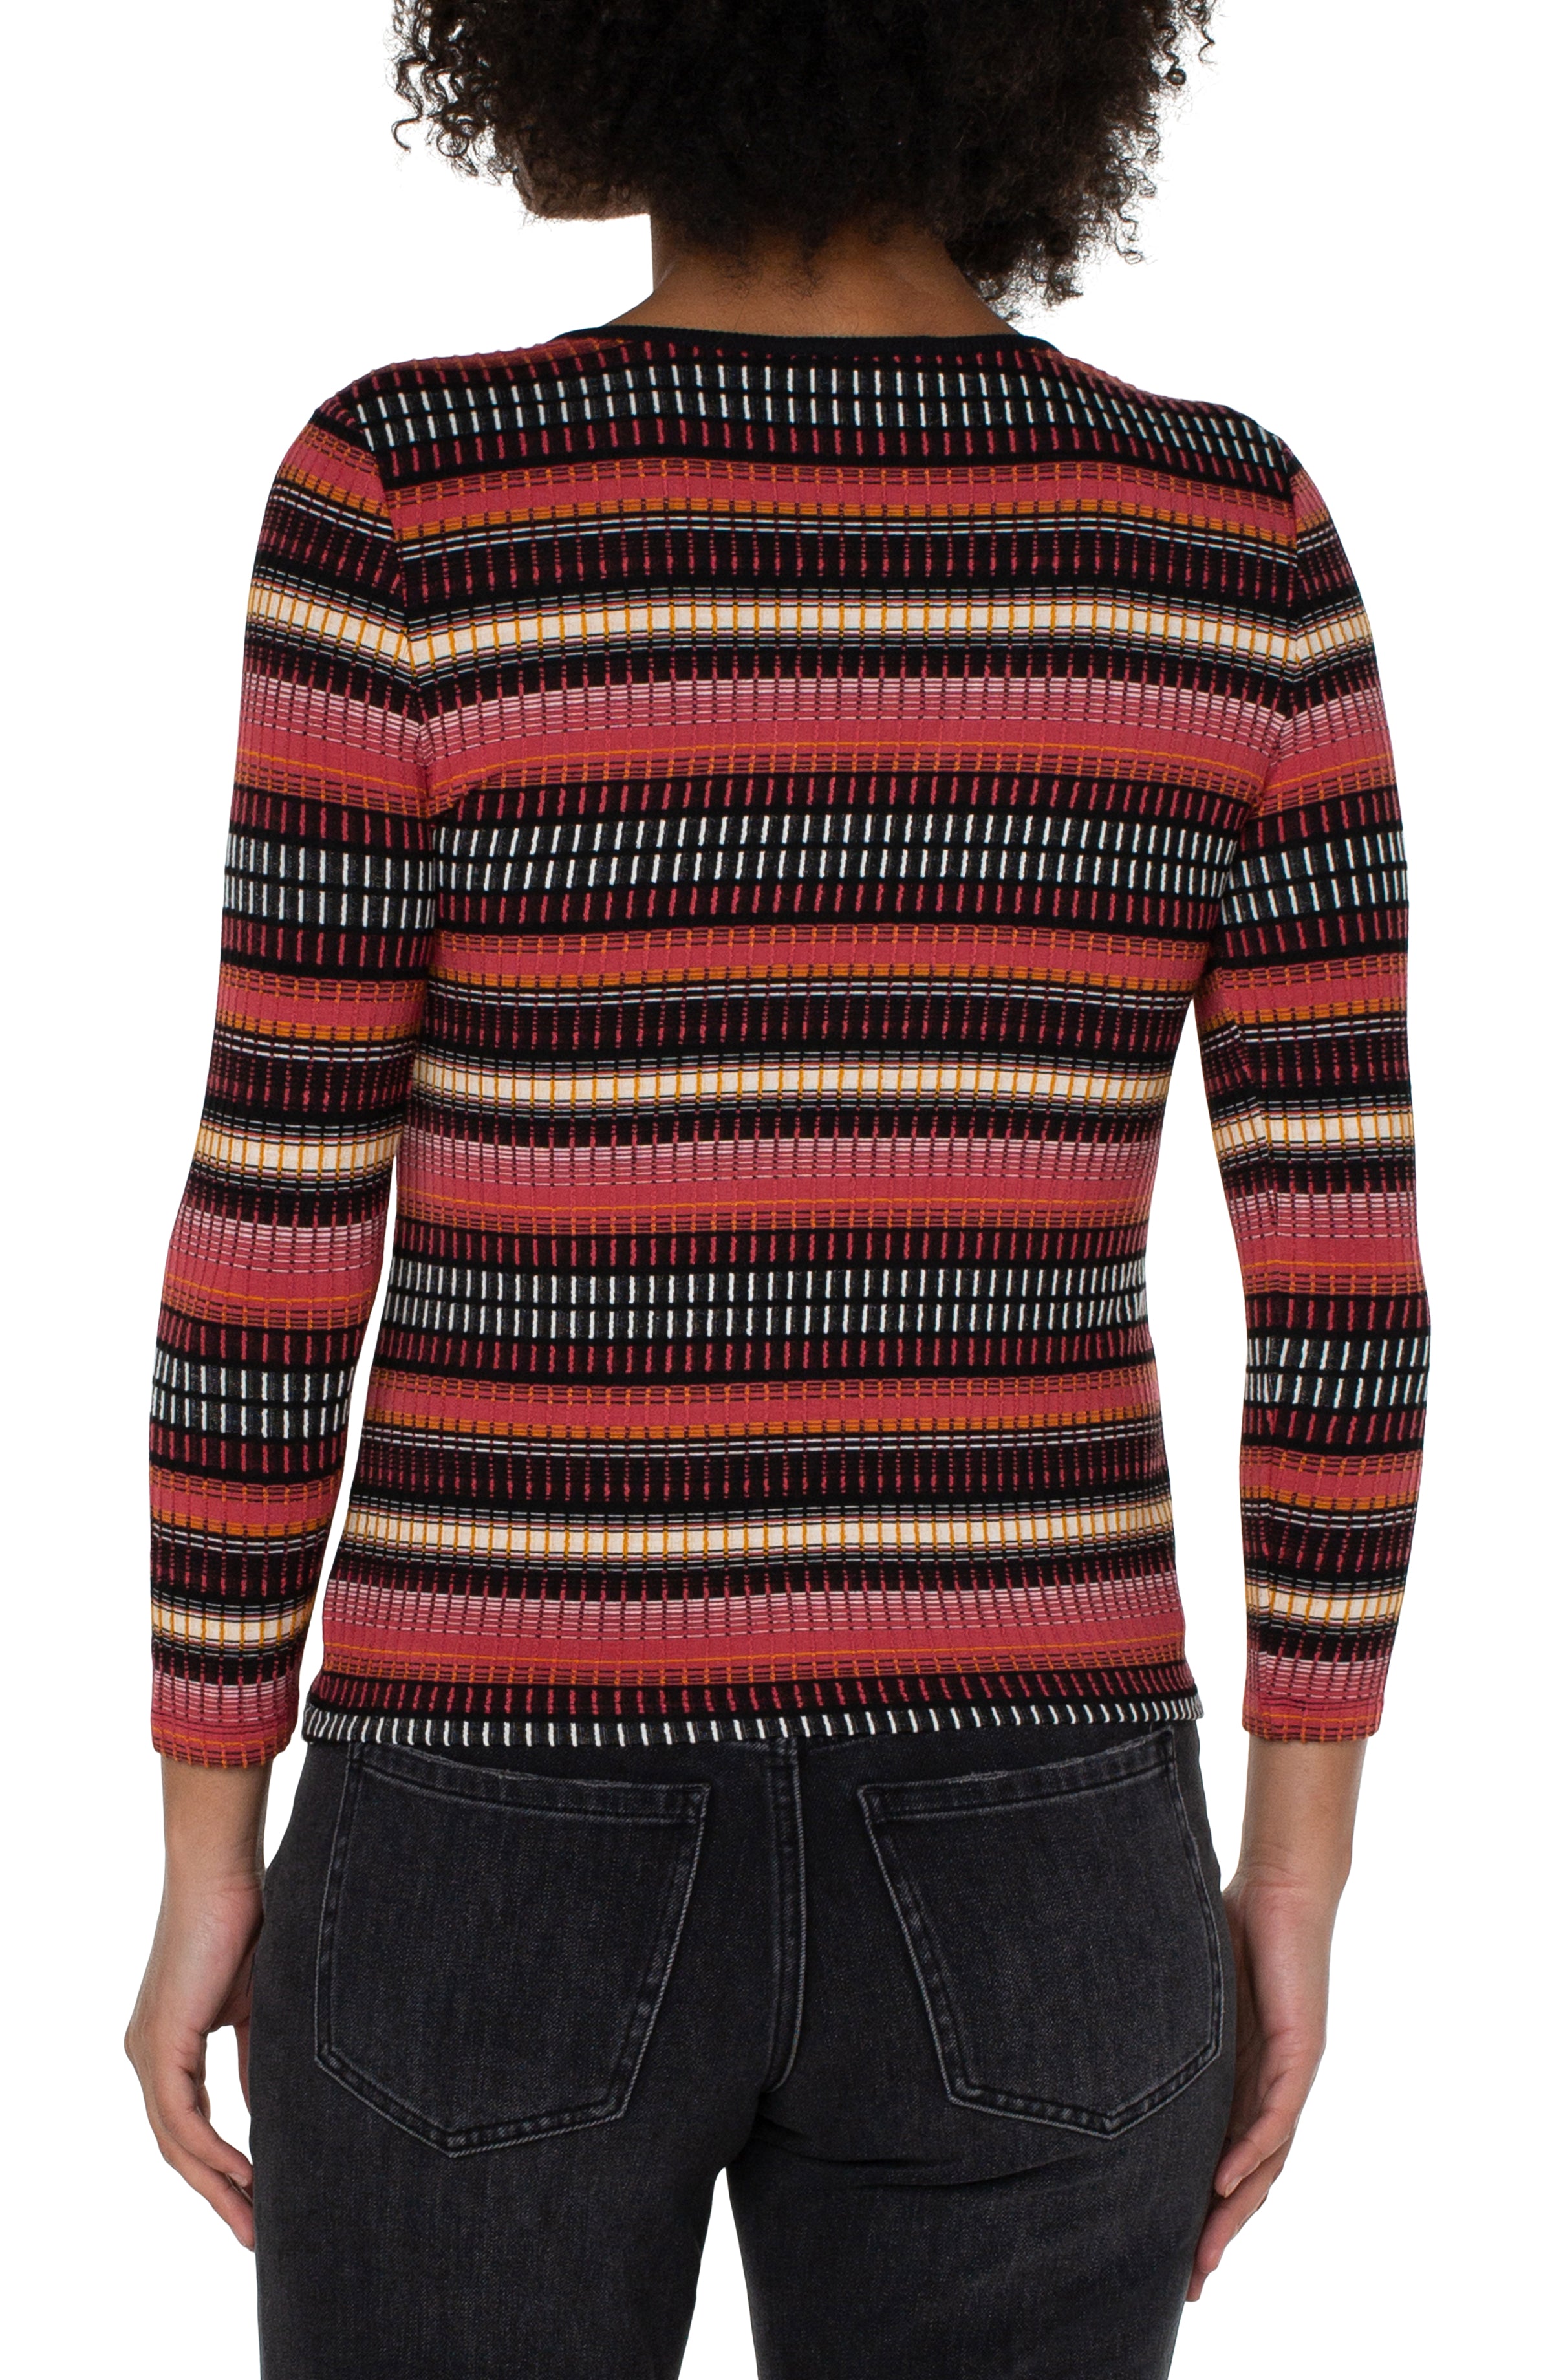 LPLA Multi stripe knit top. LARGE